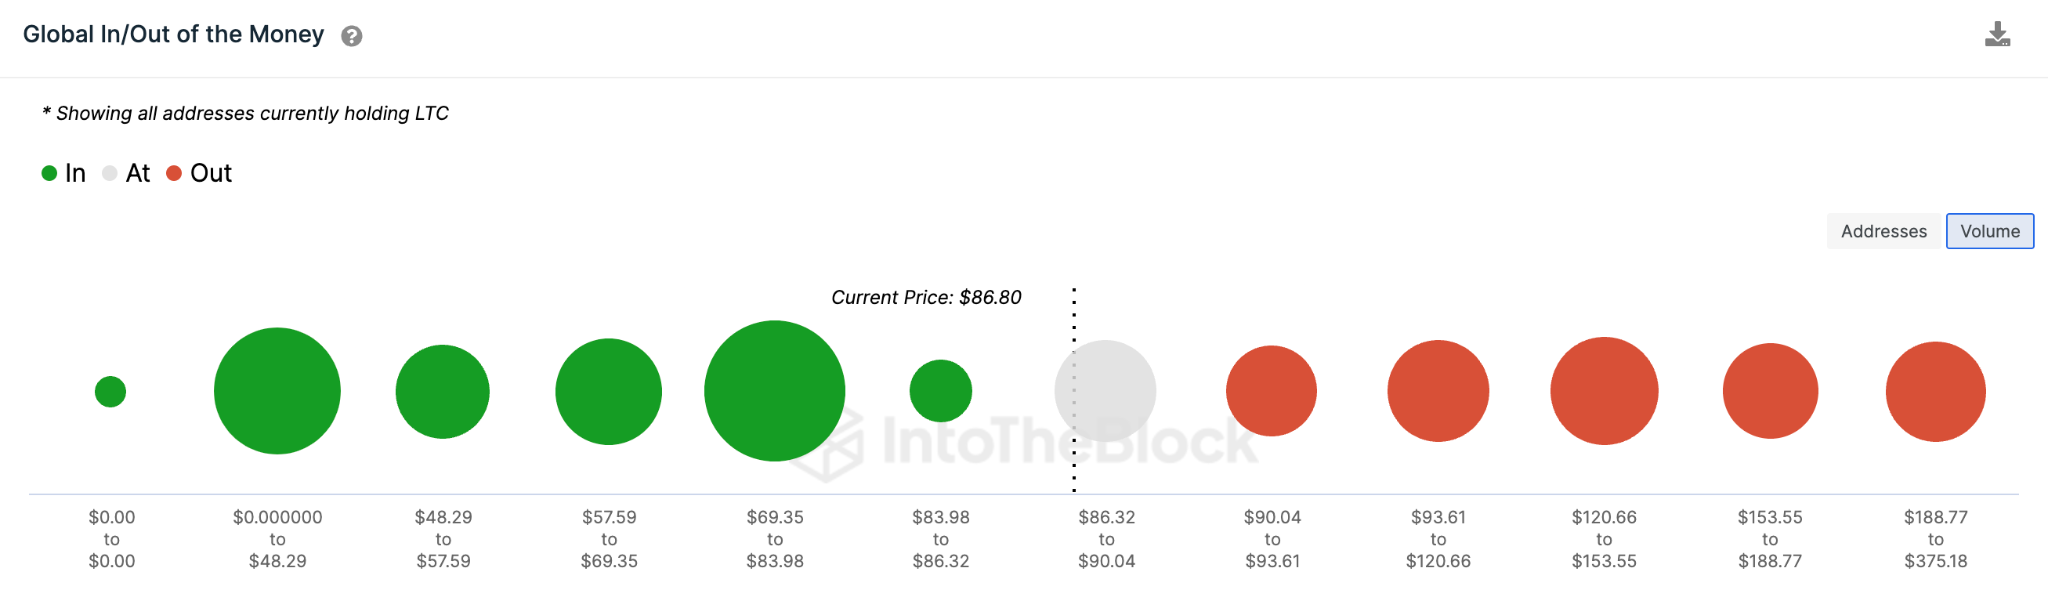 Predicción de precios de Litecoin (LTC) - Datos GIOM.  mayo 2023